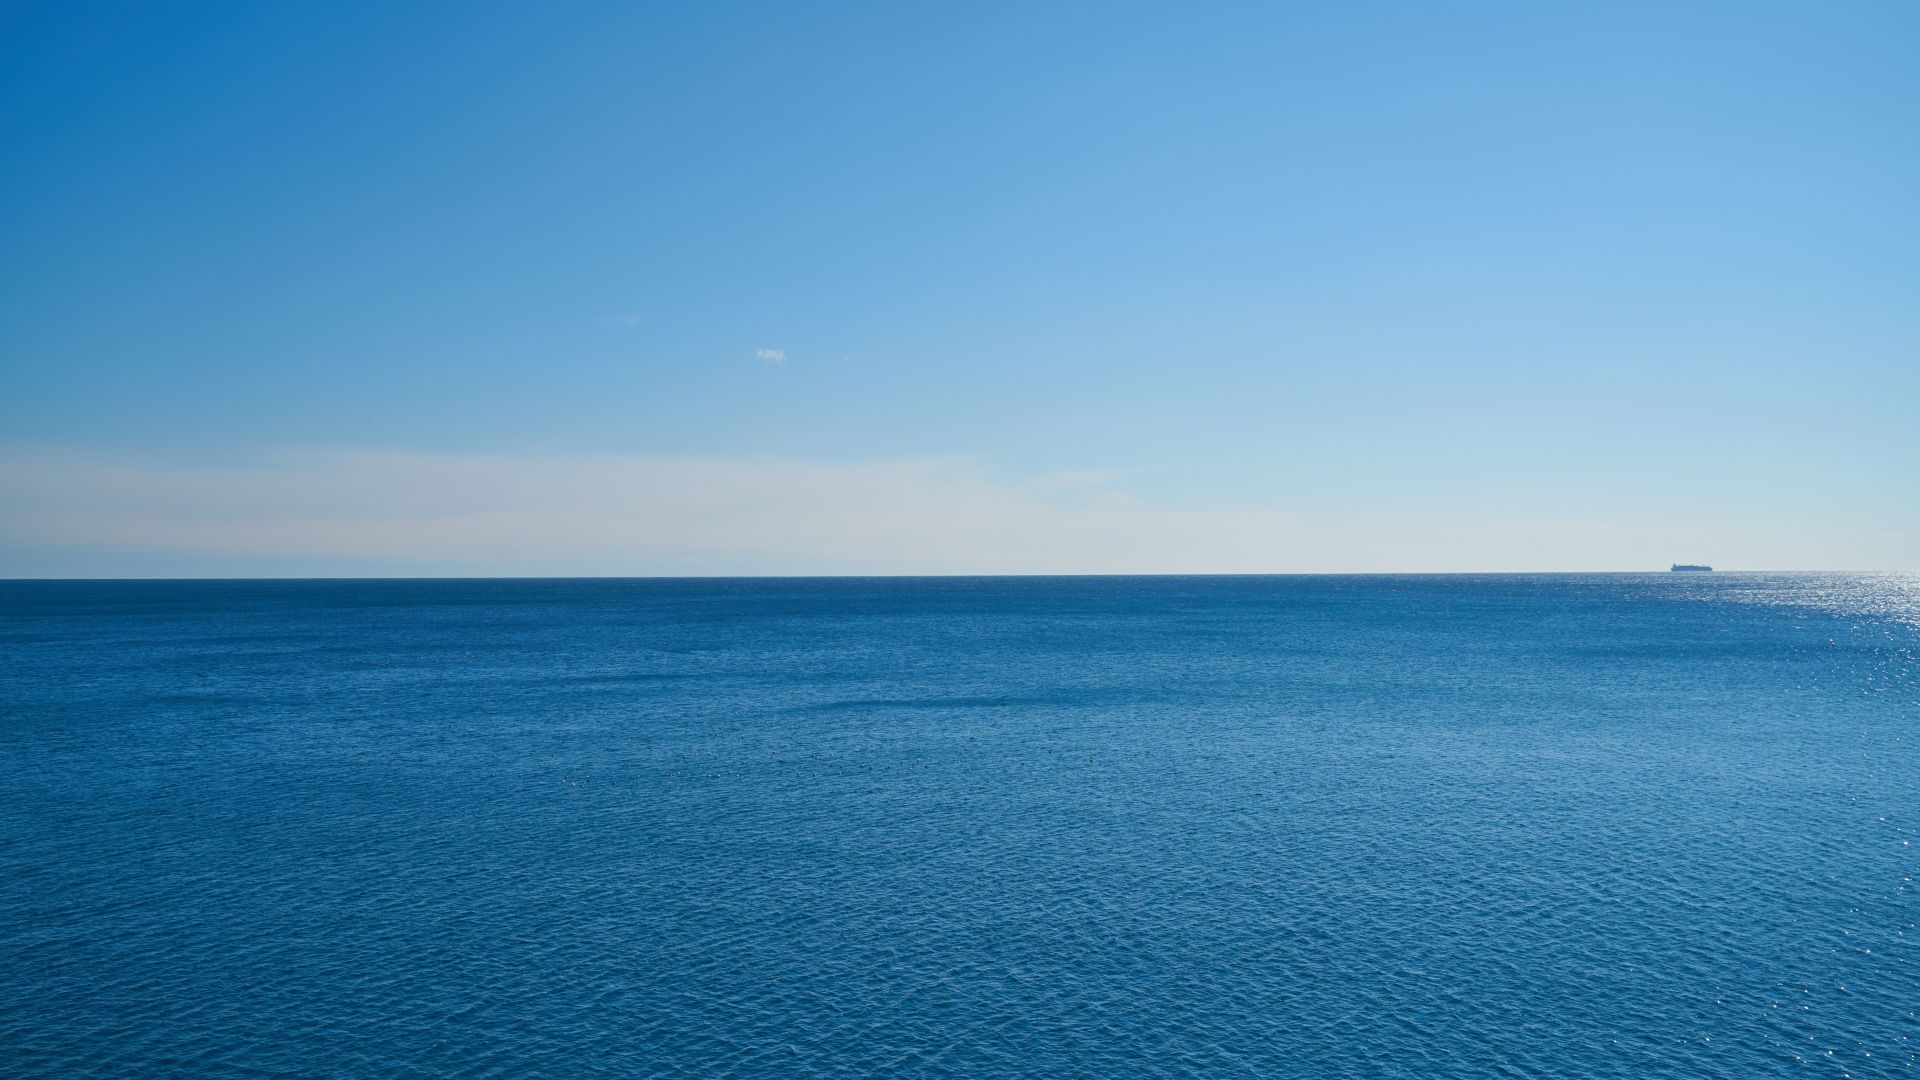 Deep, blue sea, nature wallpaper, HD image, picture, background, e0c73b